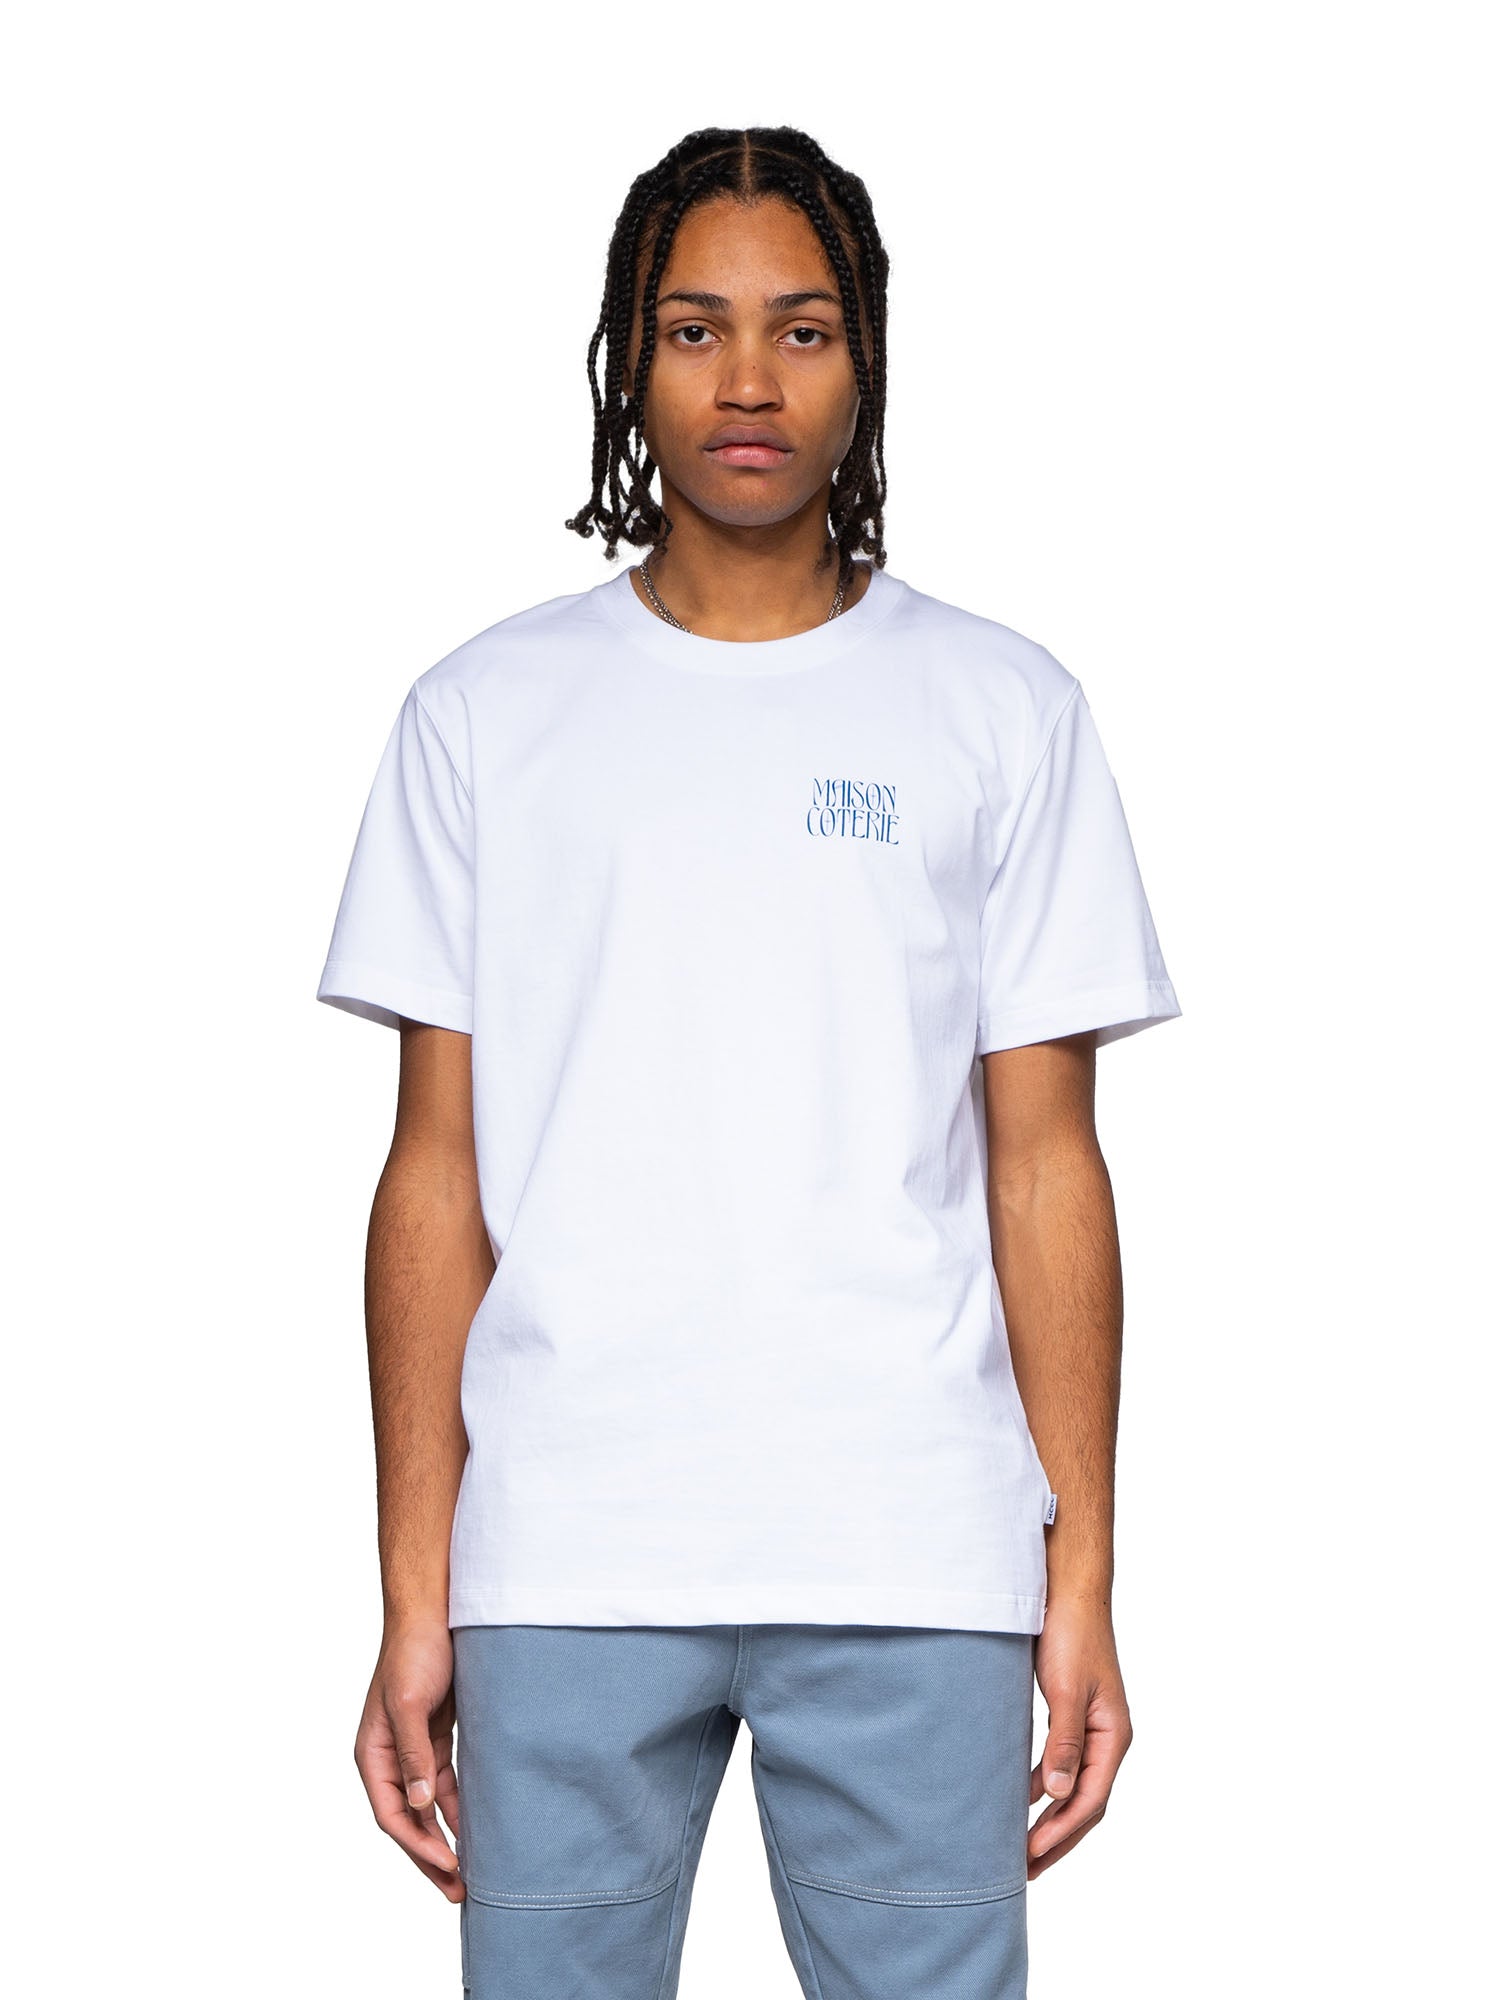 Asher - T-shirt graphique - Blanc